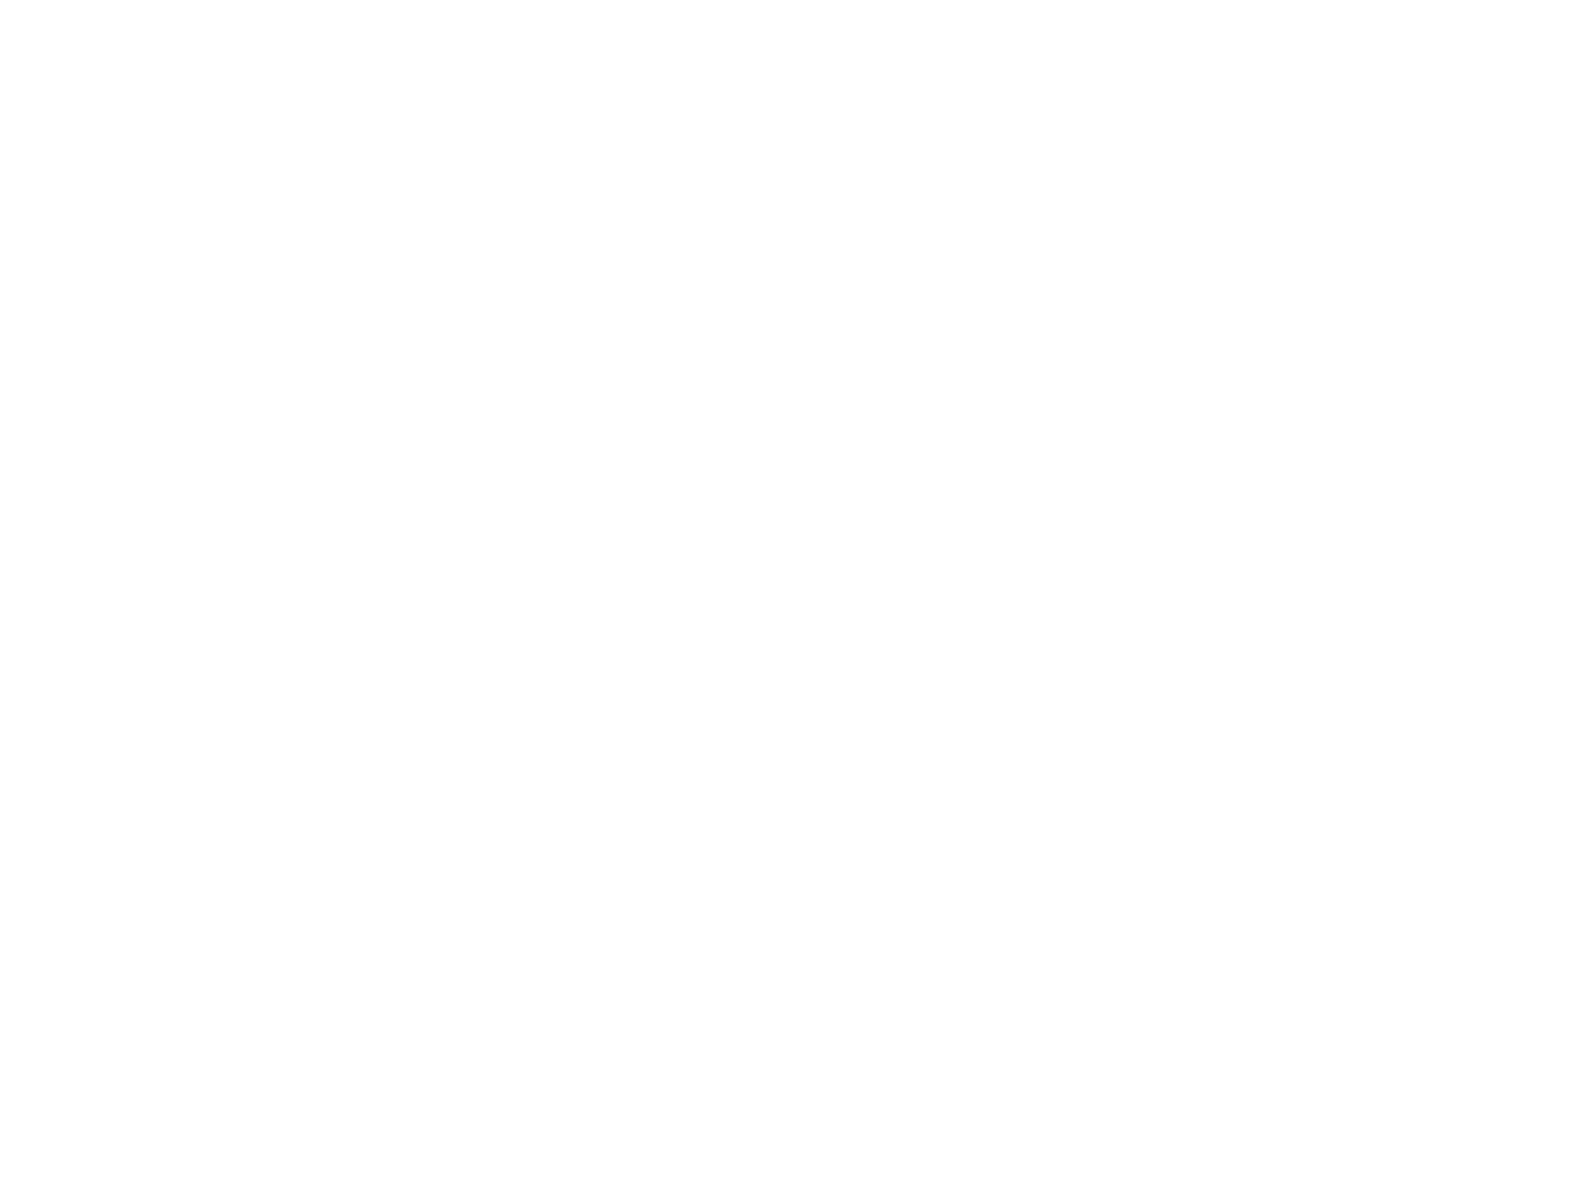 Bitdeer Technologies Group logo pour fonds sombres (PNG transparent)